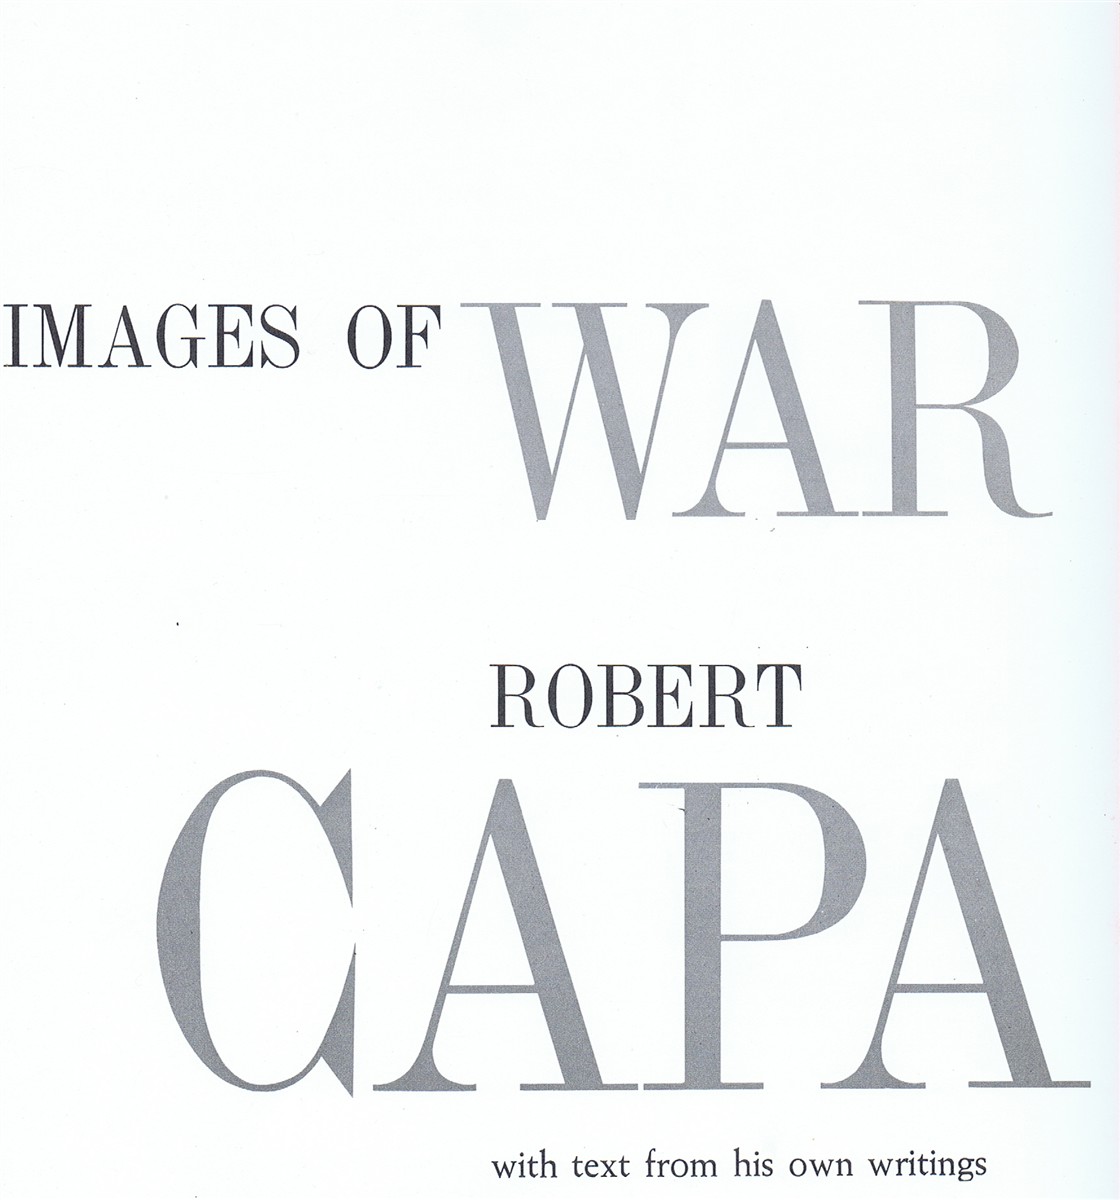 CAPA, ROBERT - Images of War